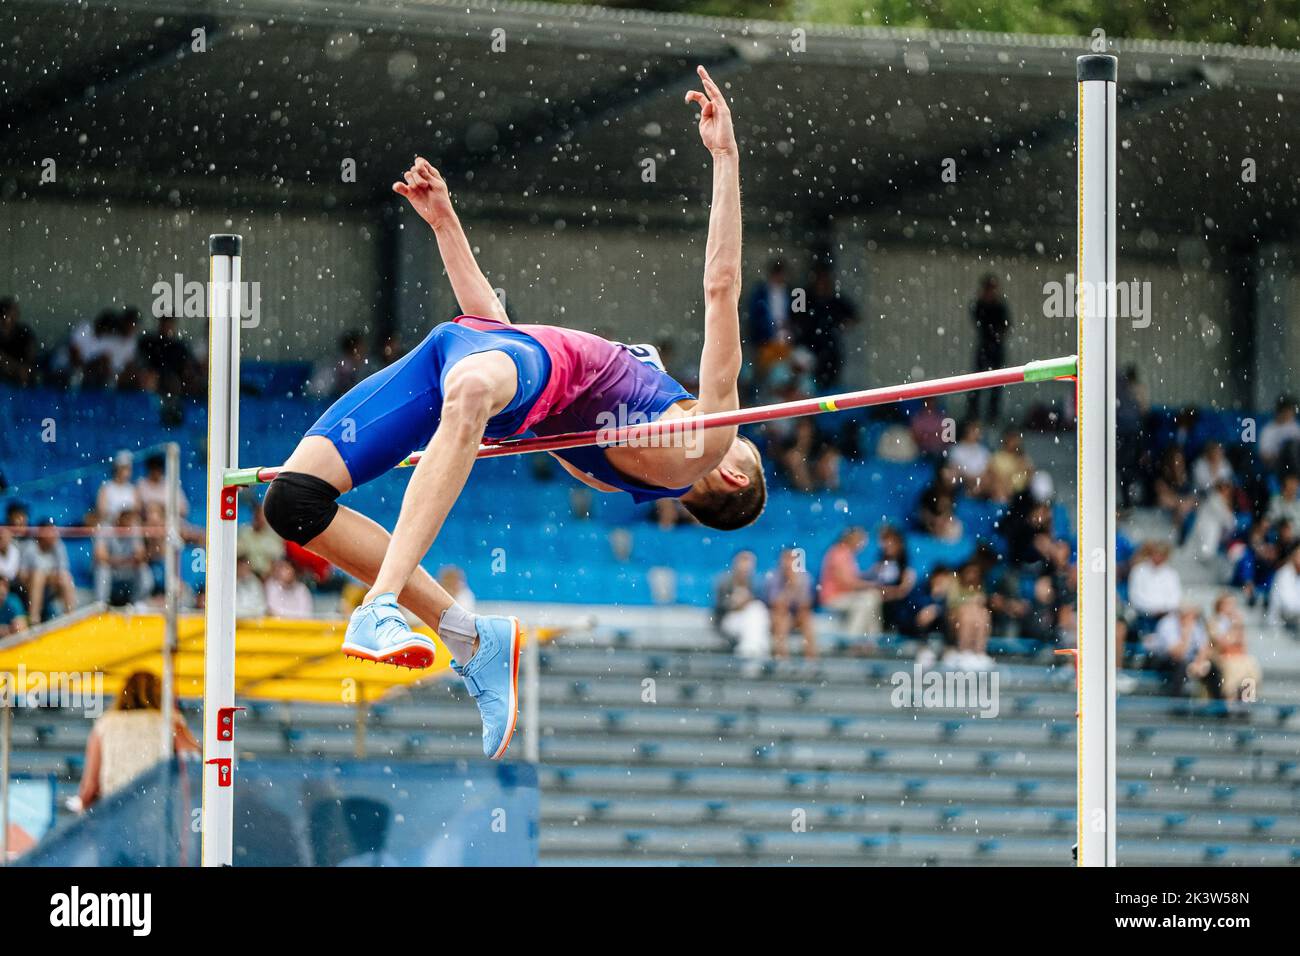 male athlete high jump in rain Stock Photo